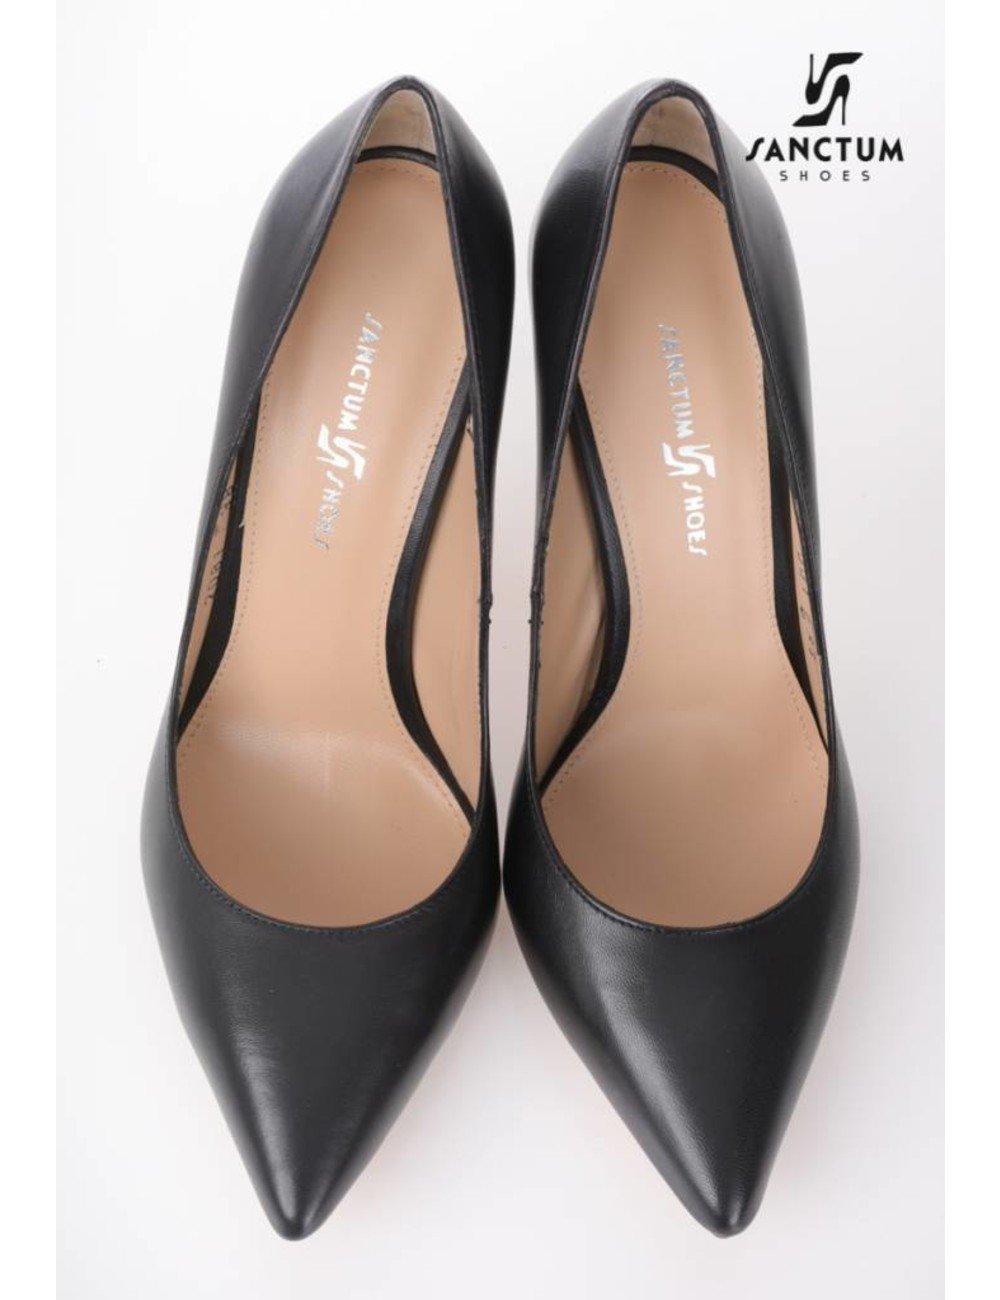 Italian pumps with thin heels - Italian Heels Sanctum Shoes